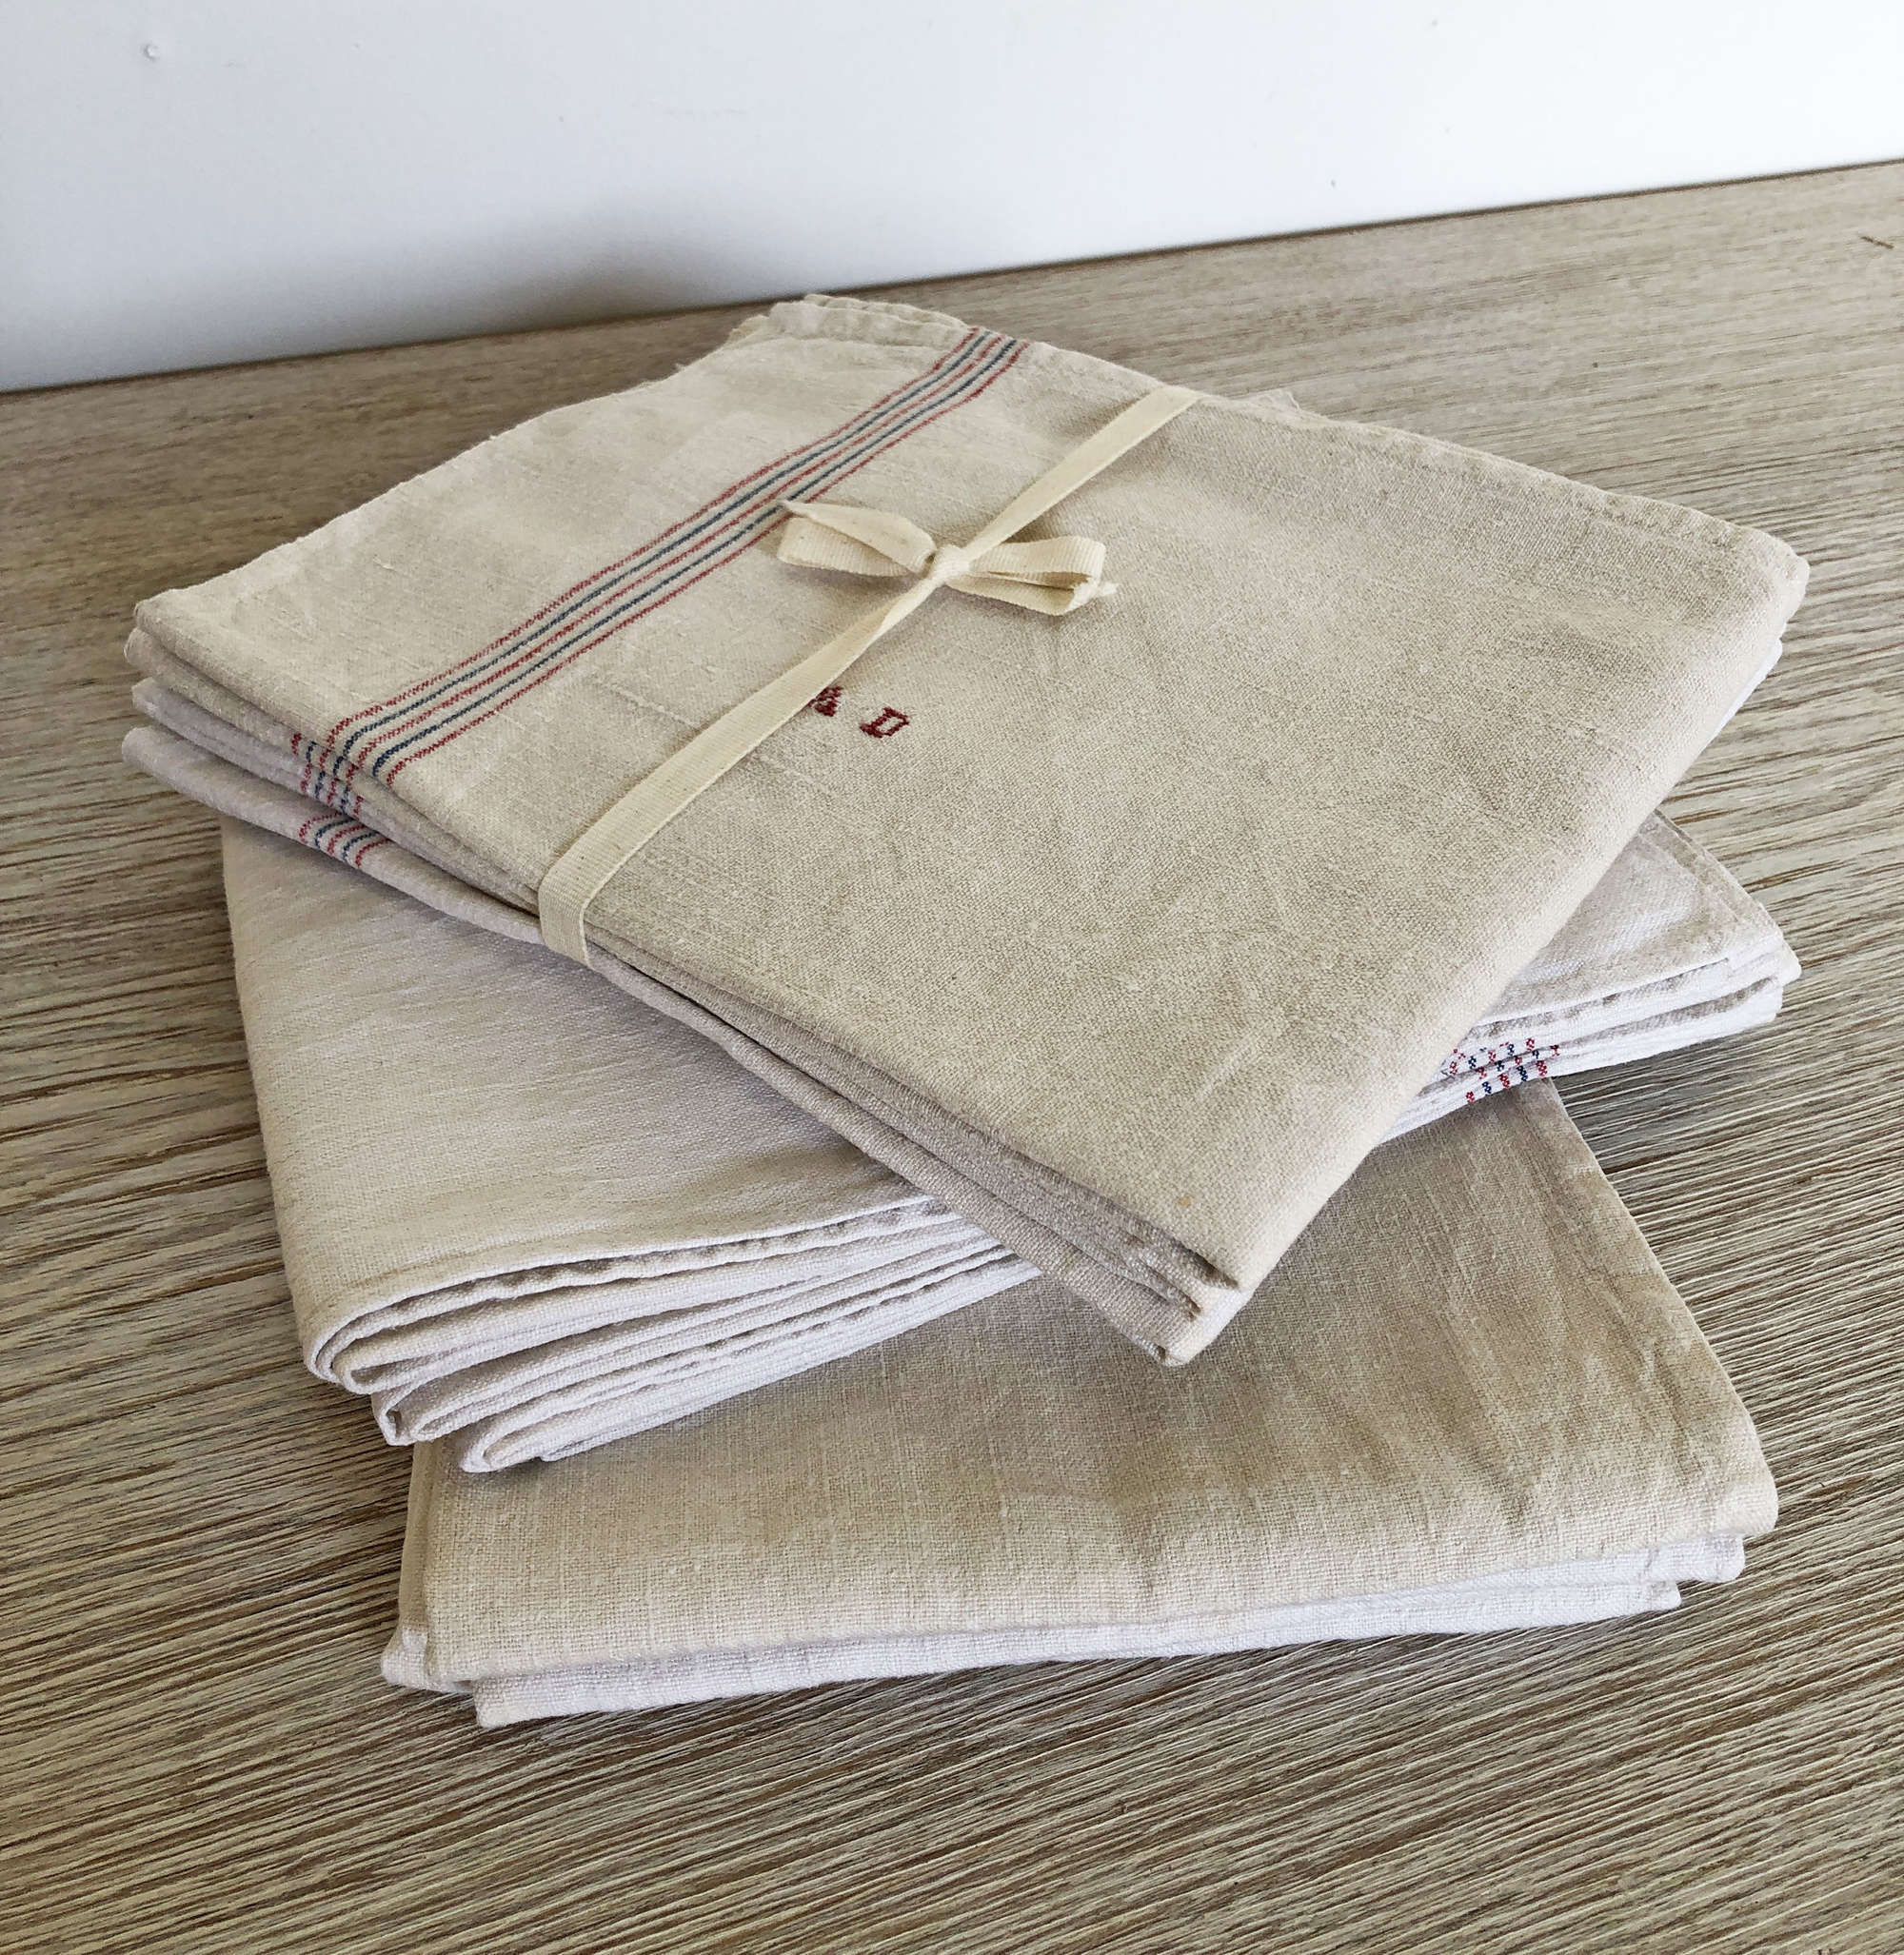 3 x Bundles of 4 early 20th c hemp/linen T-Towels